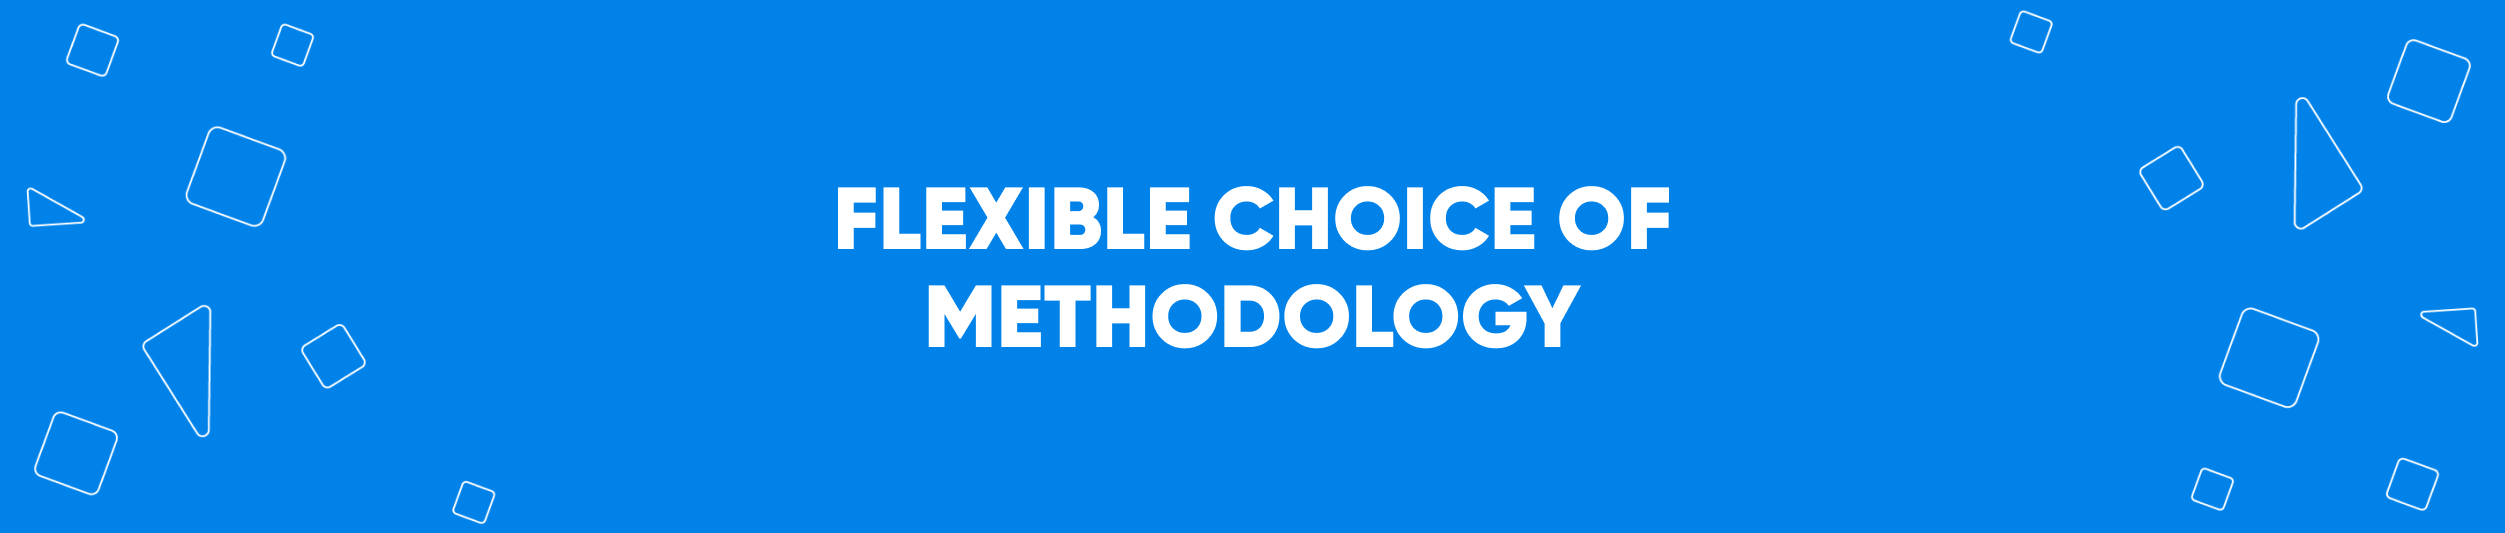 Flexible Choice of Methodology